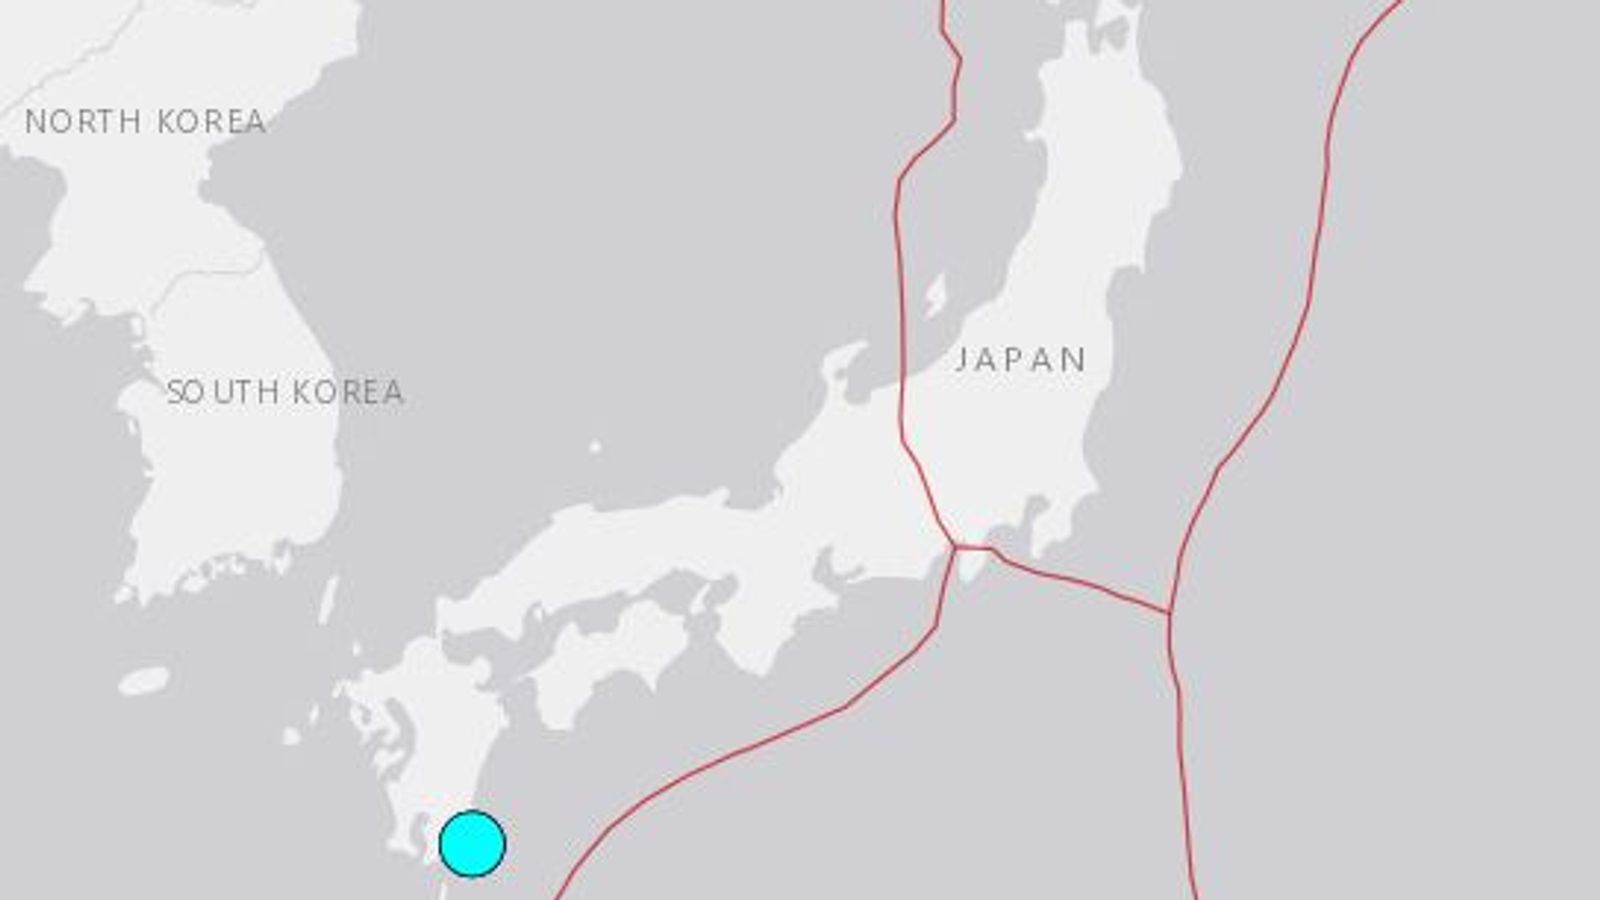 Japan's Kyushu region hit by 5.6 magnitude earthquake